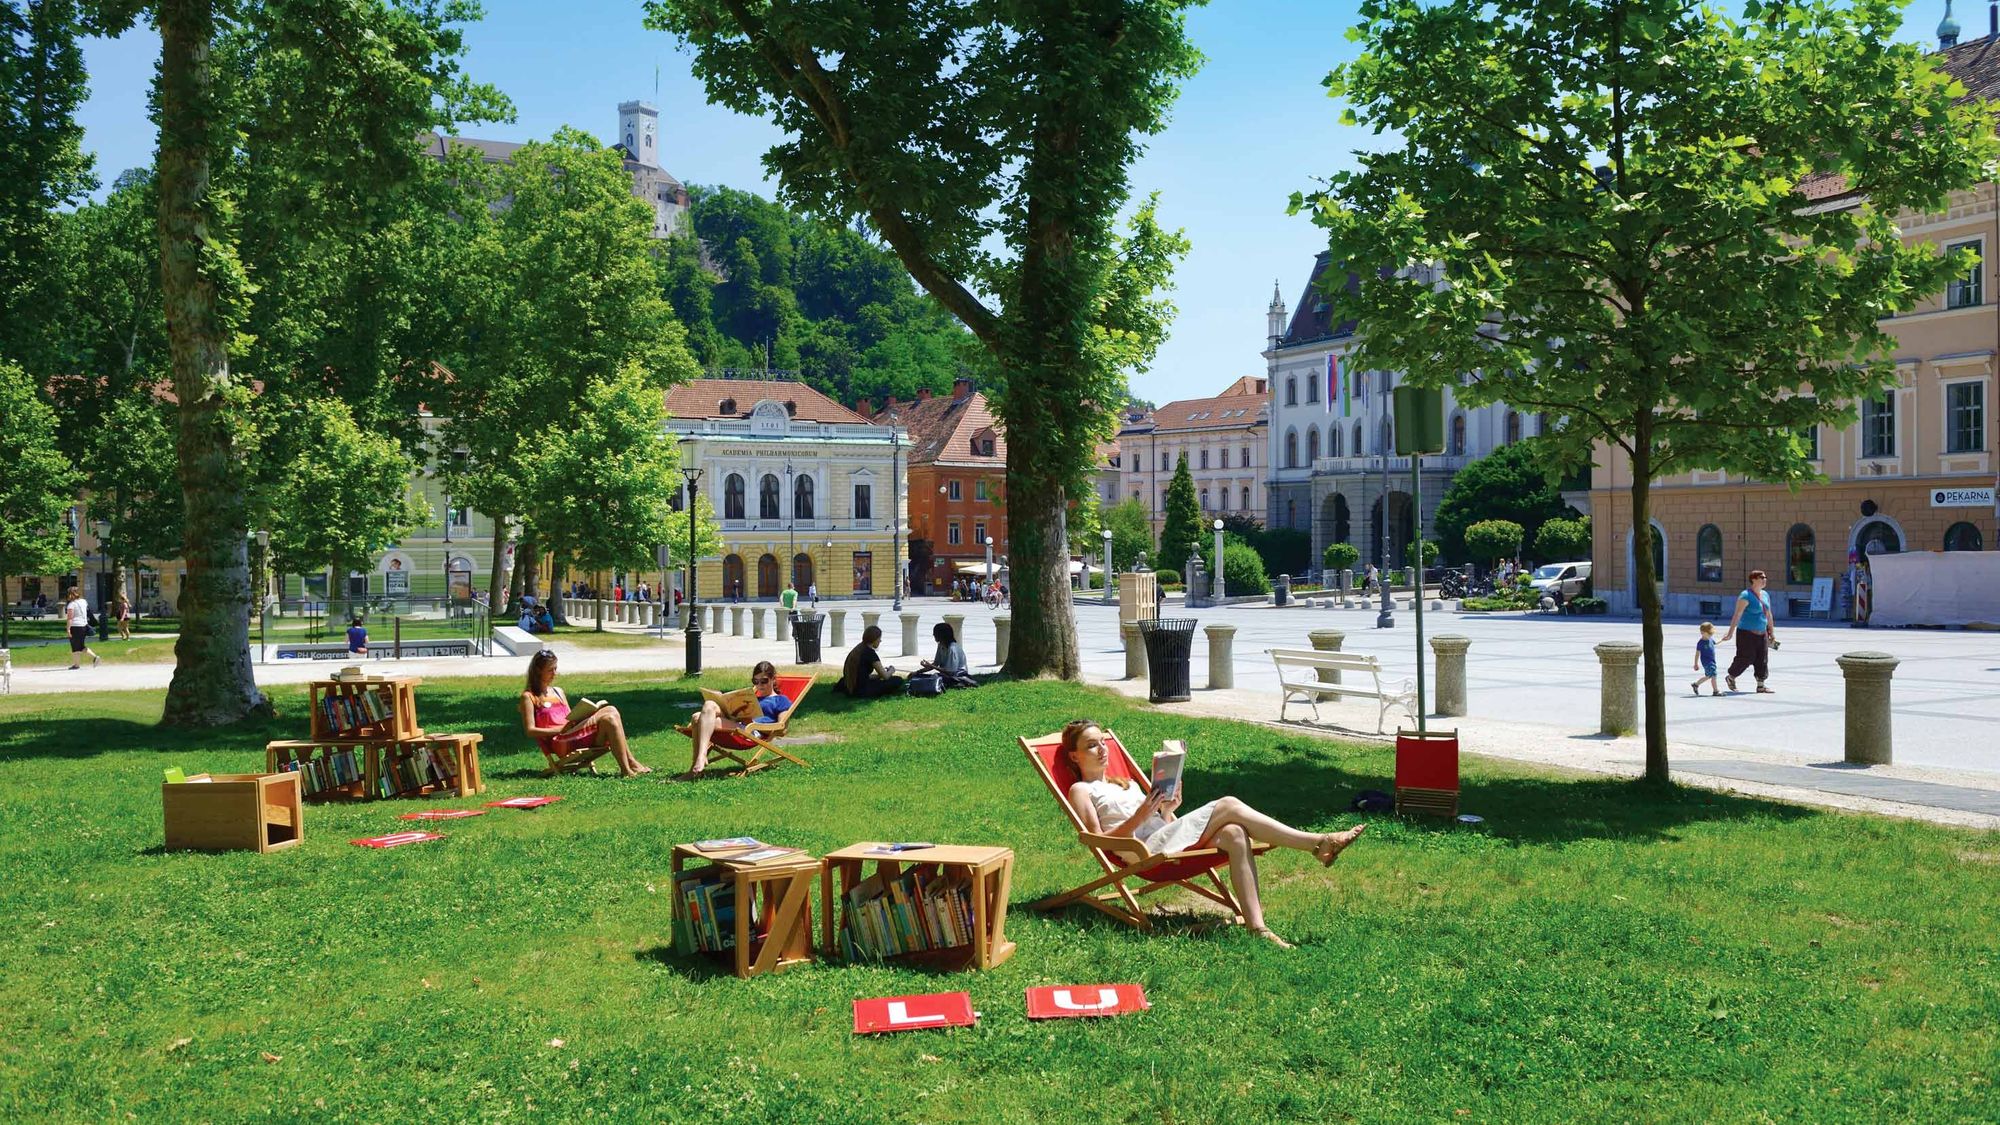 Slovenia Tourism